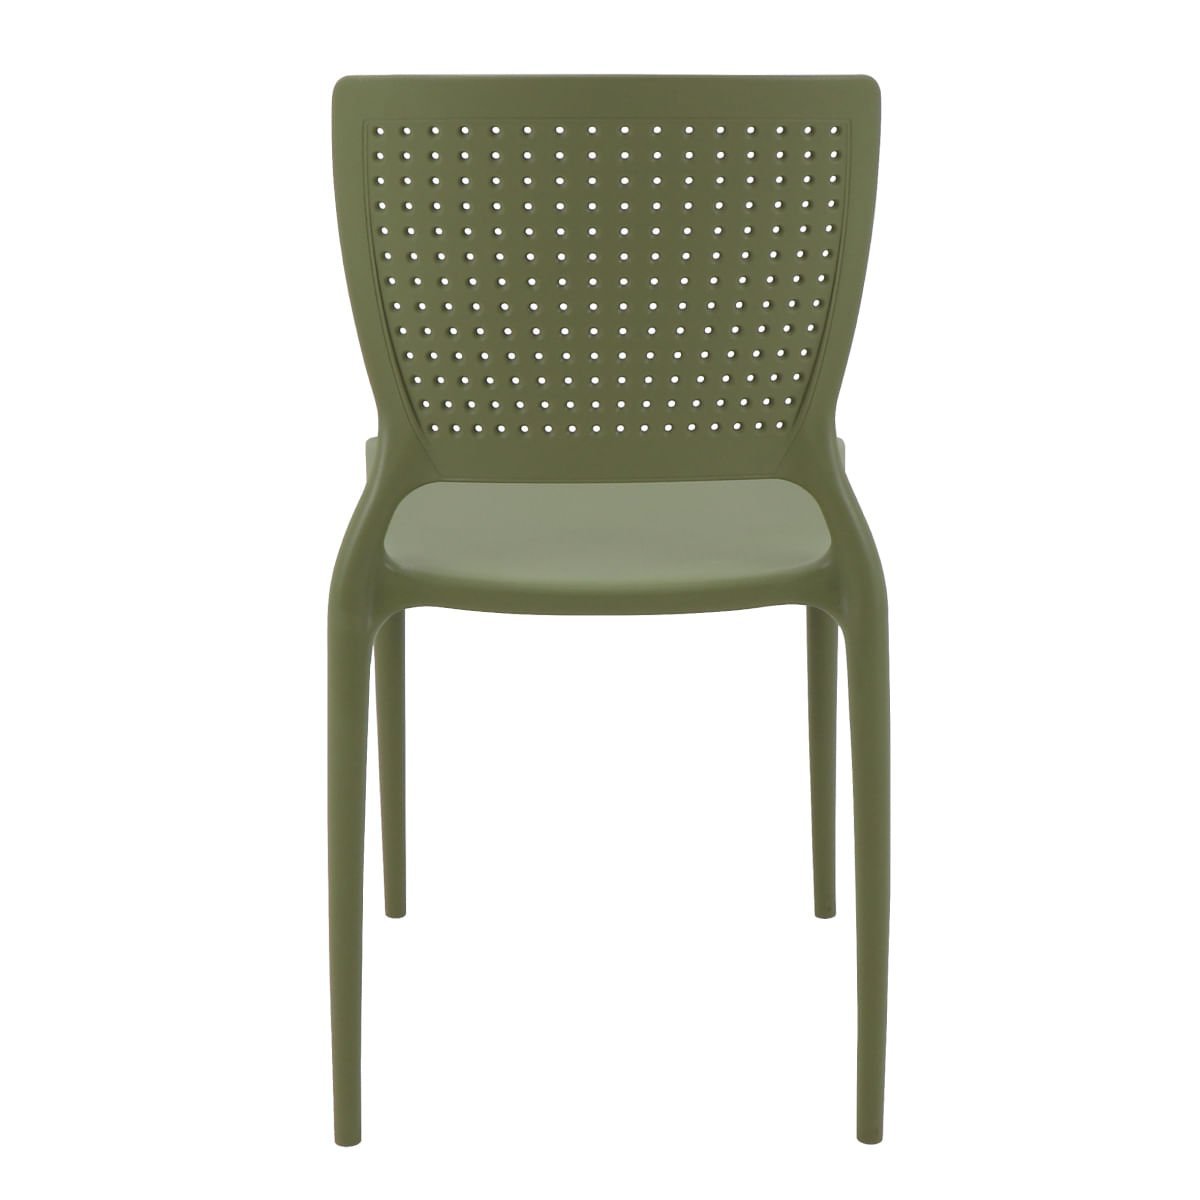 Cadeira Tramontina Safira em Polipropileno e Fibra de Vidro Verde Oliva - 6